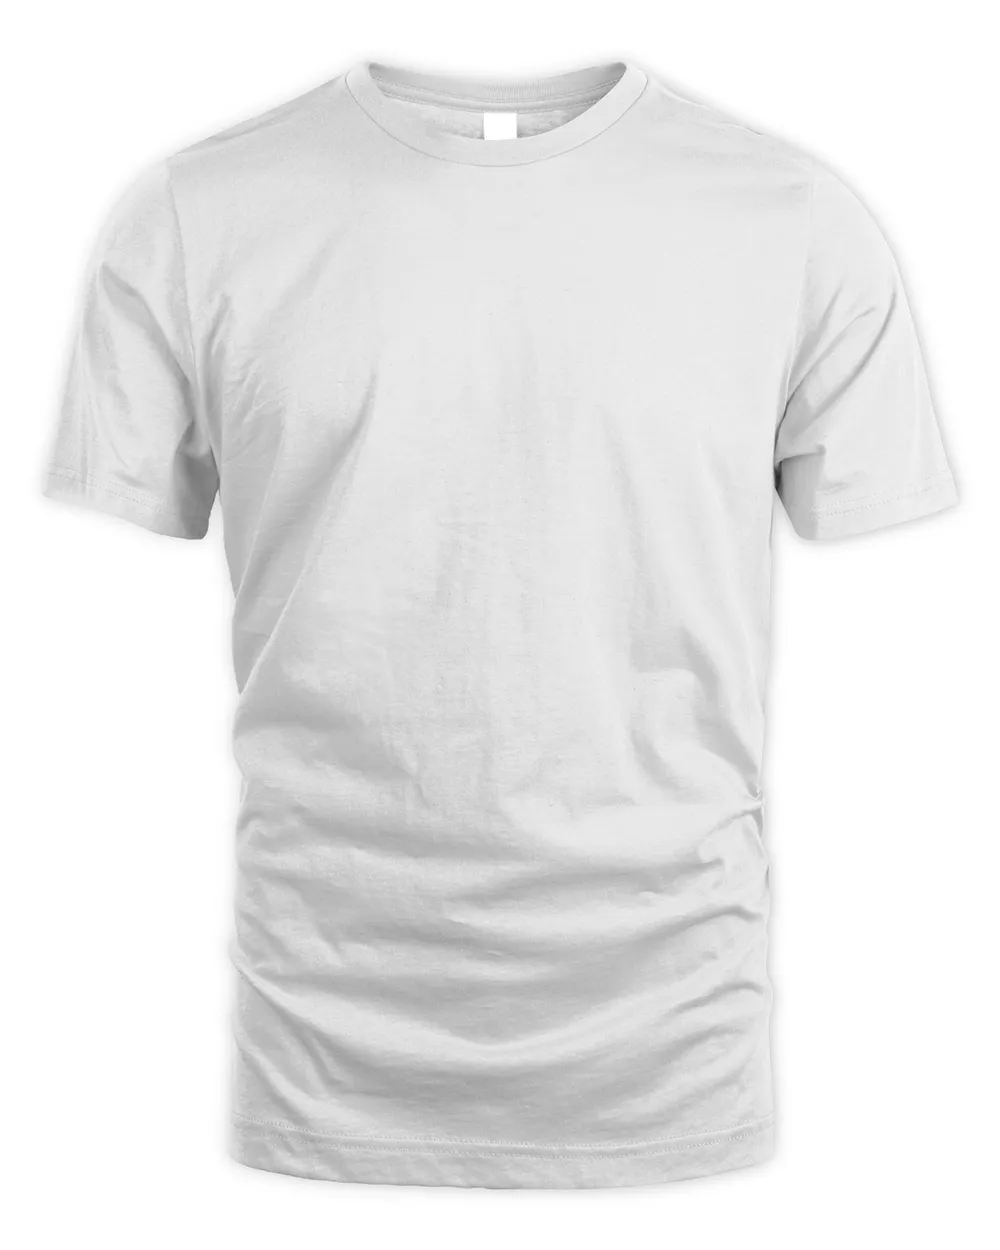 Viking T Shirt For men - Heathen Nation